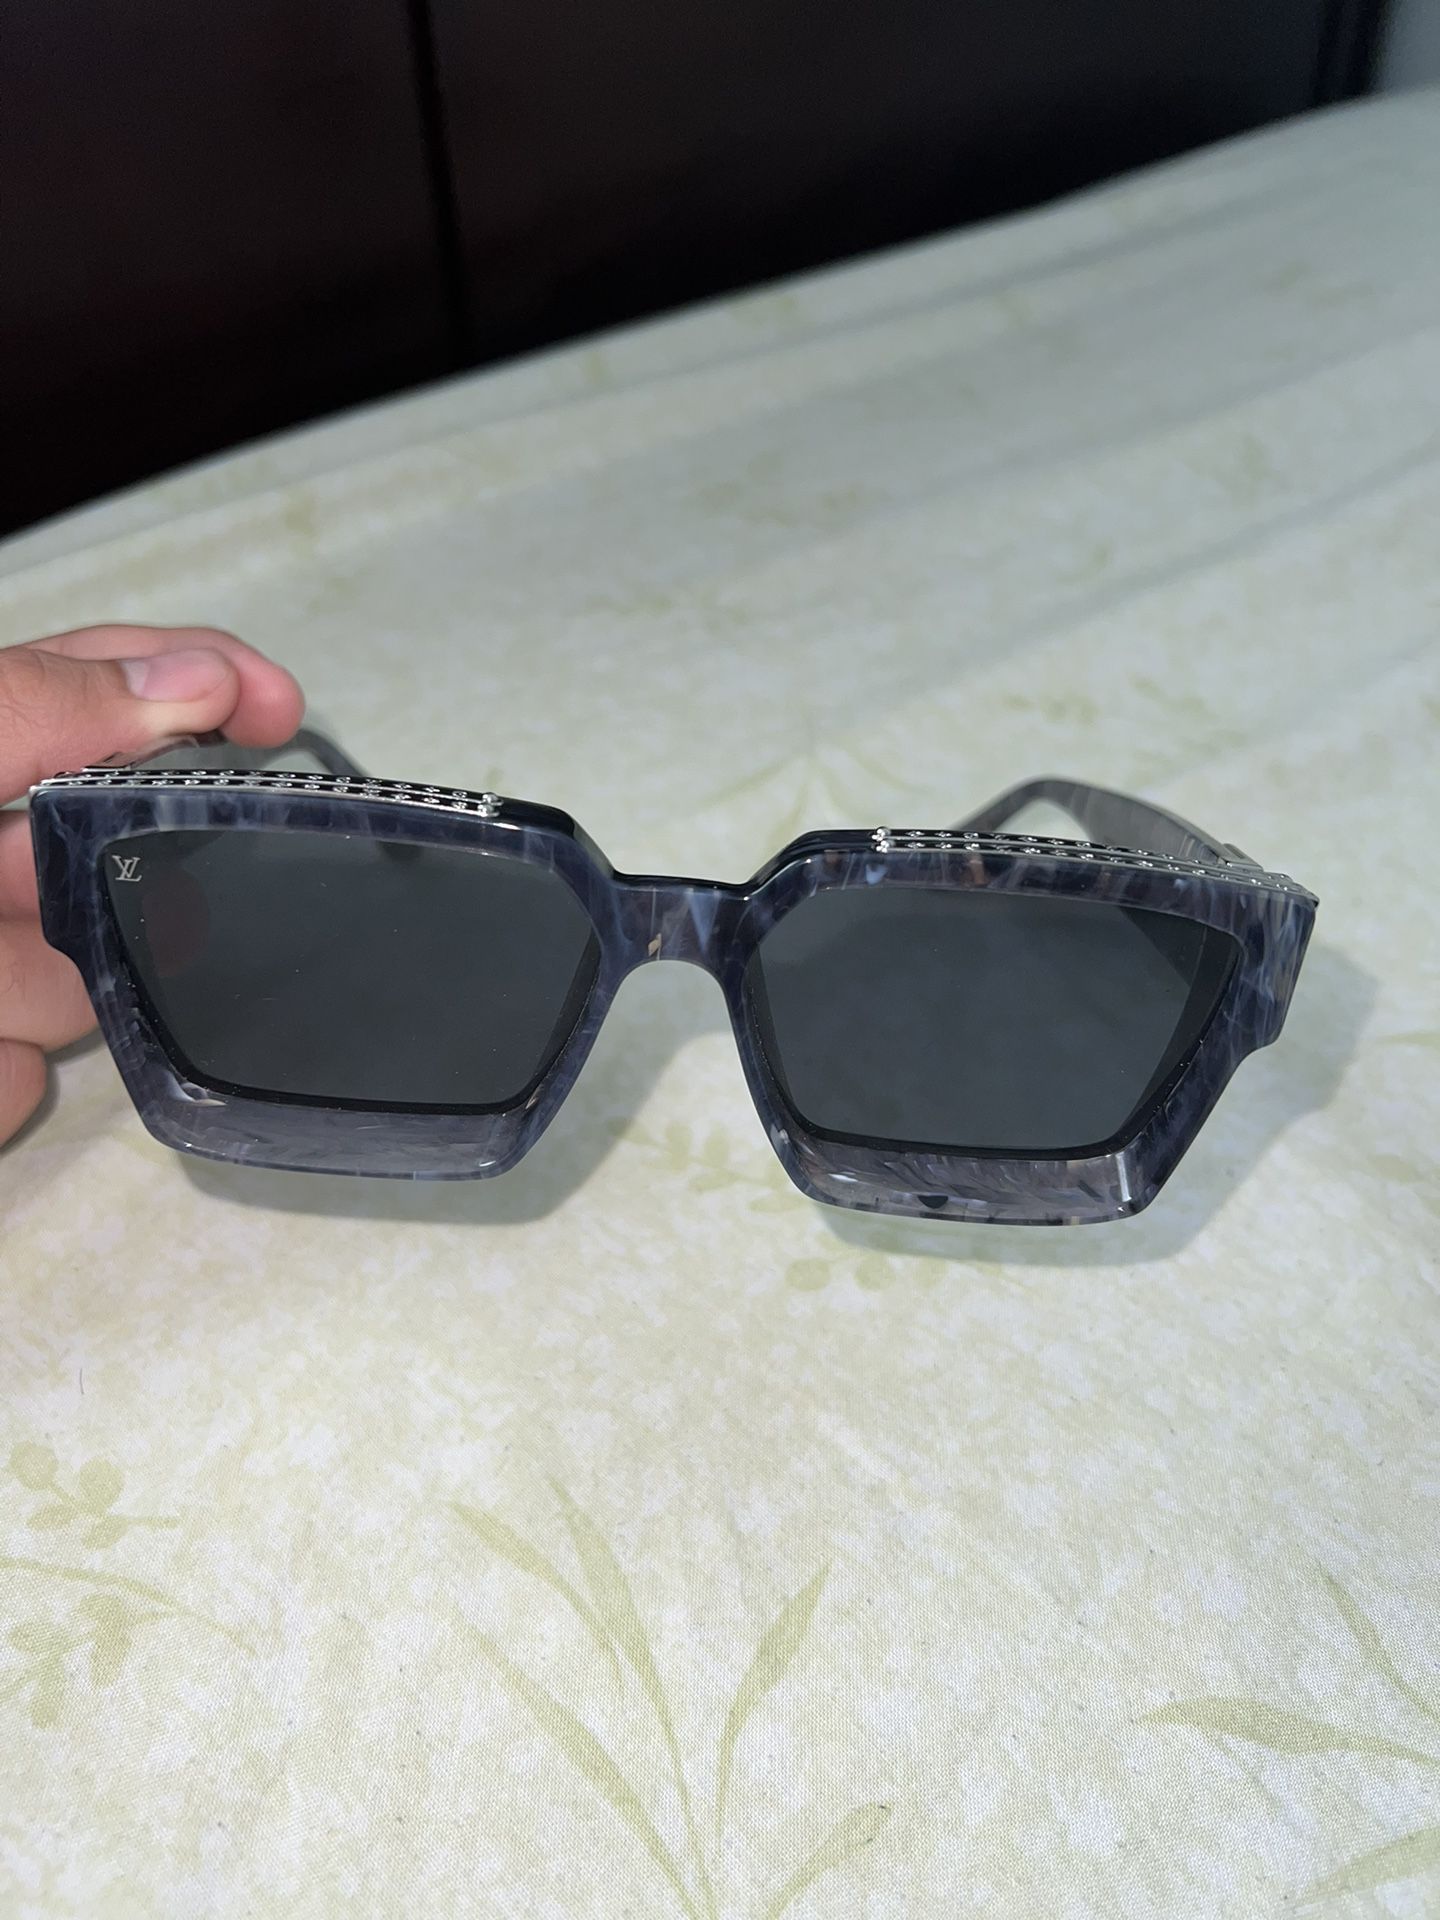 Louis vuitton 1.1 millionaires sunglasses for Sale in Manassas, VA - OfferUp